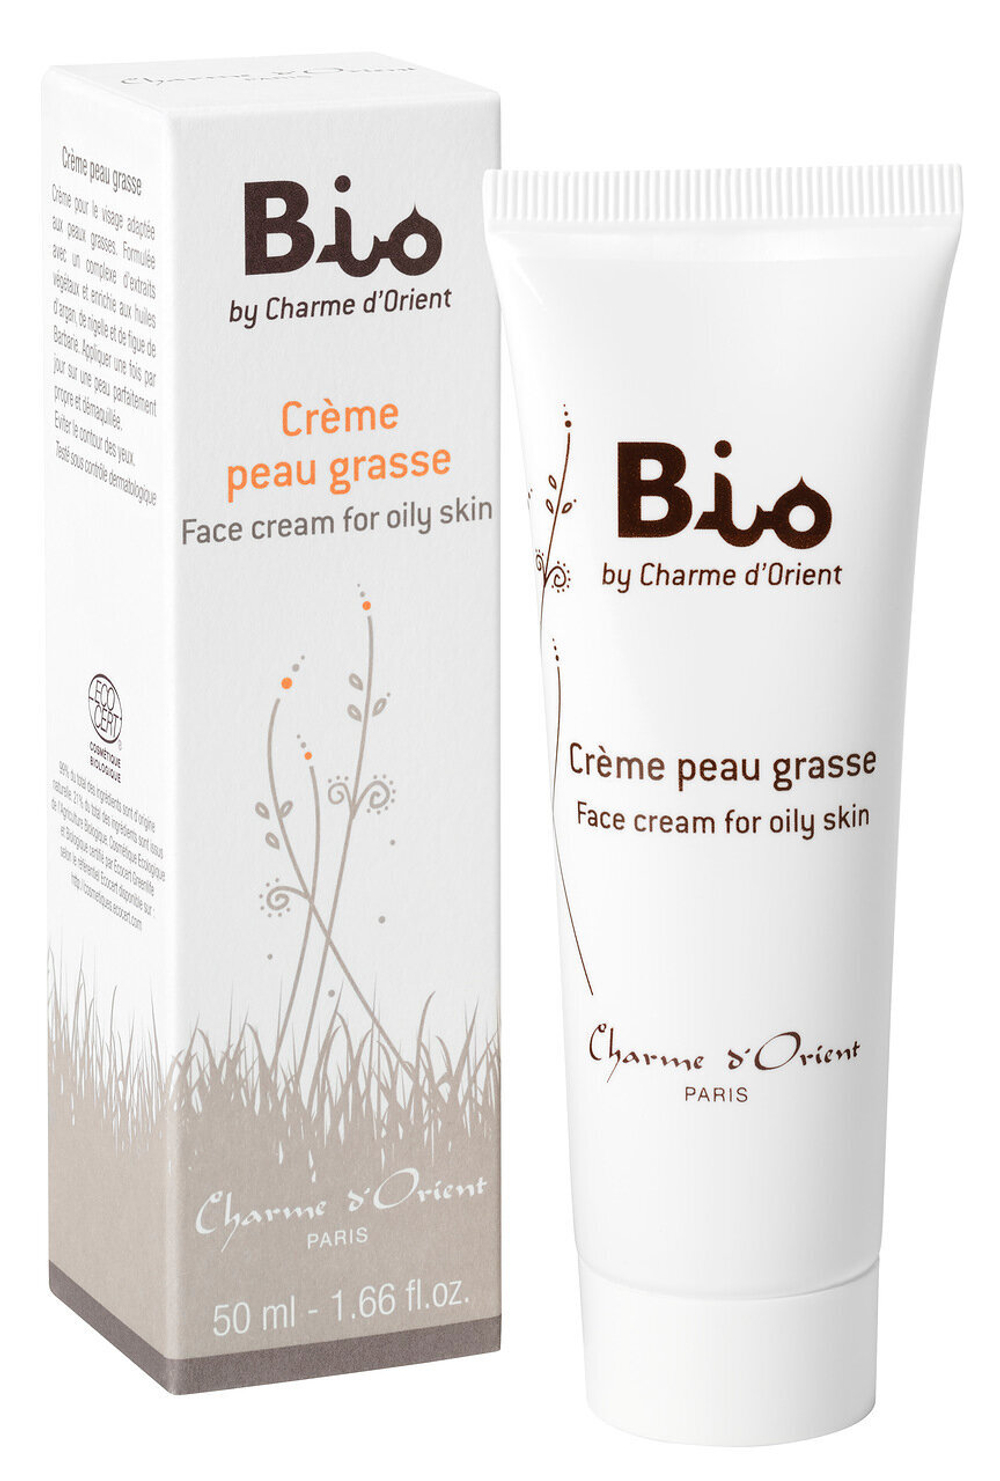 CHARME D'ORIENT BIO1477 Крем для лица для жирной кожи (линия Bio) Bio by Charme d’Orient – Crème peau grasse/Face cream for oily skin (Шарм ди Ориент) 50 мл